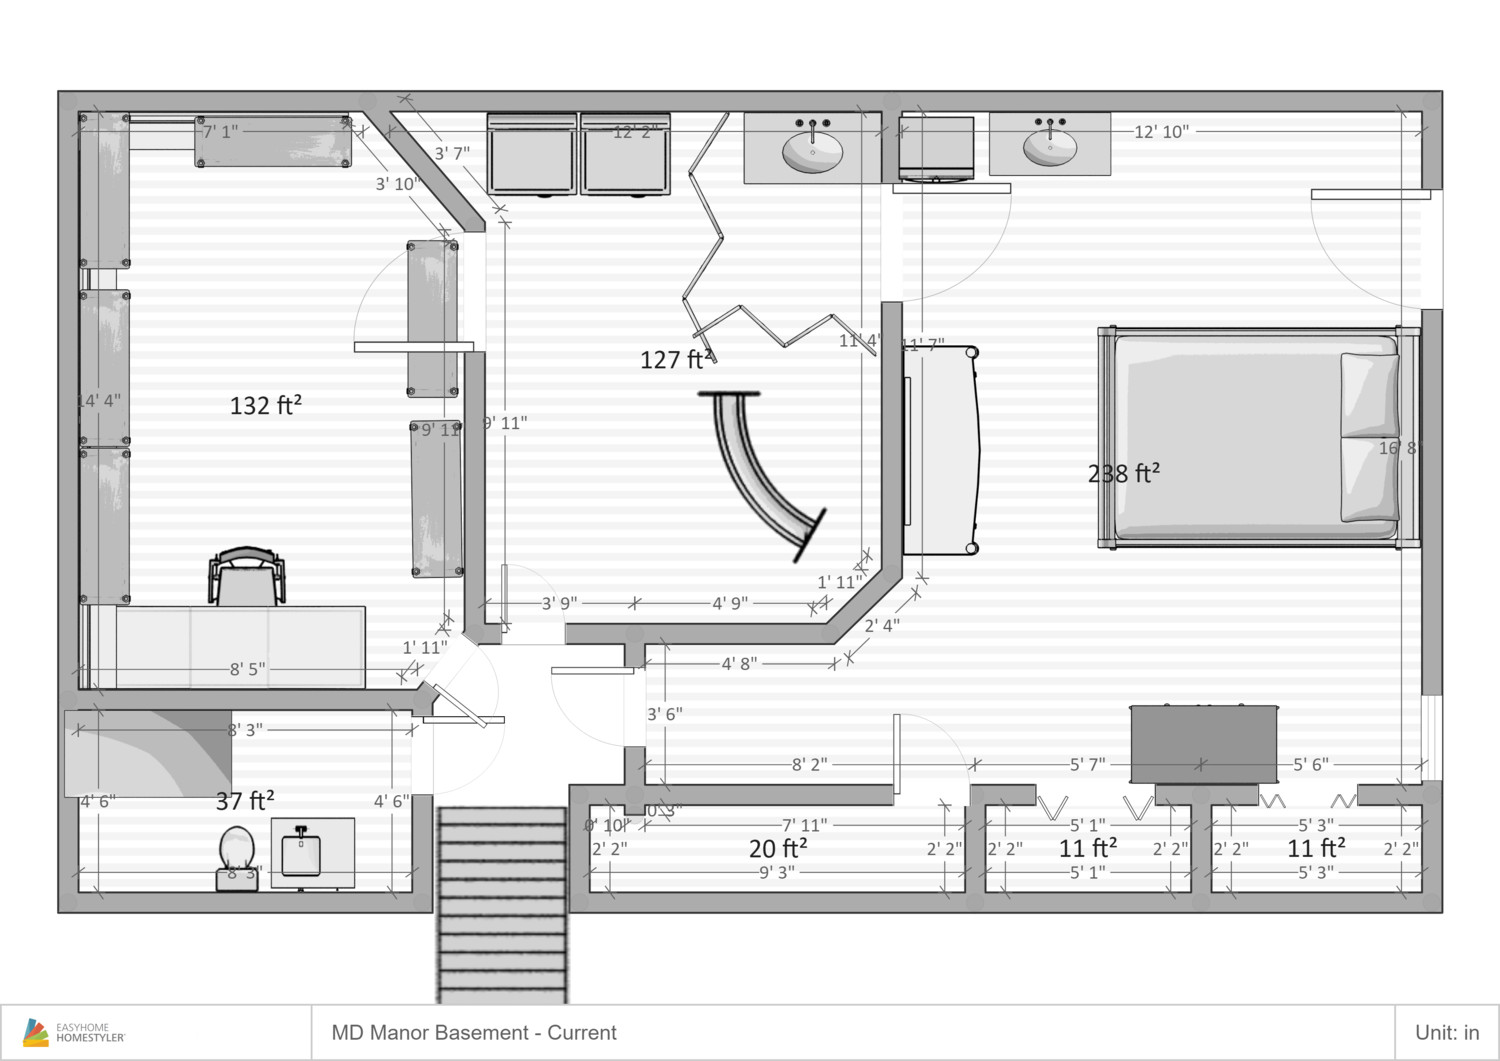 Kitchenette Floor Plans
 Basement Efficiency w Private Entrance Kitchenette